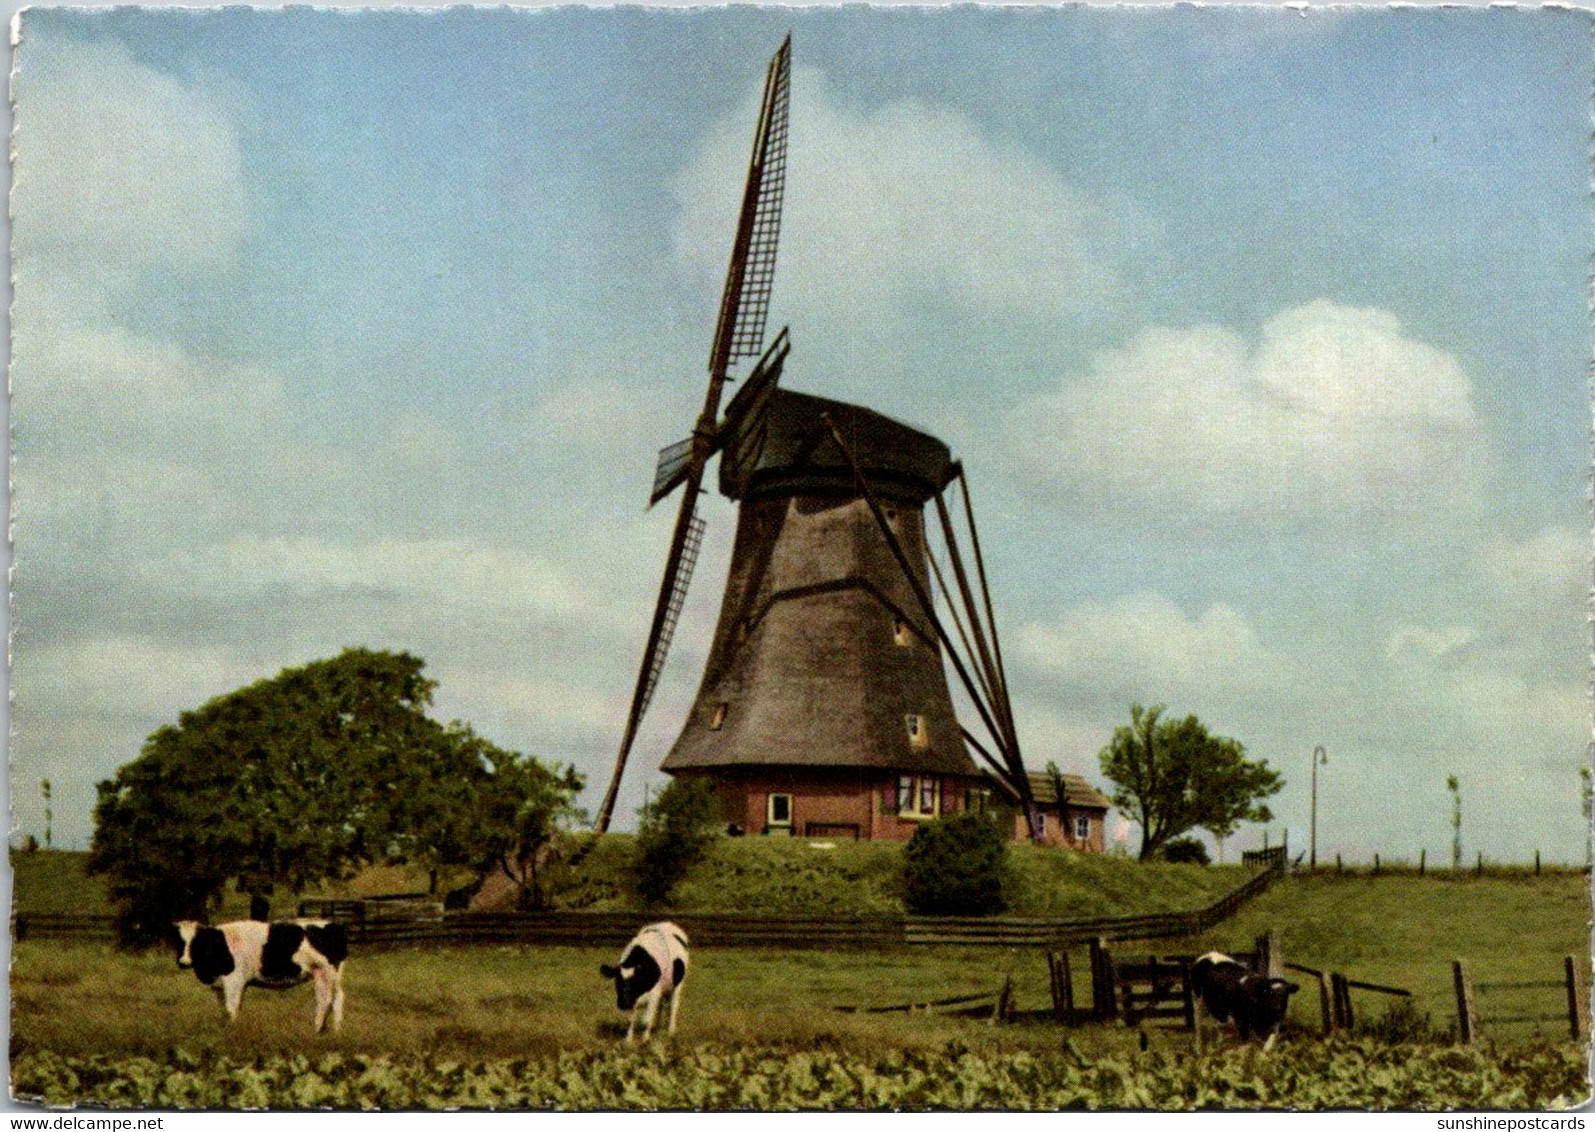 Netherlands Aalsmeer Flower Centre Of Europe Windmill - Aalsmeer